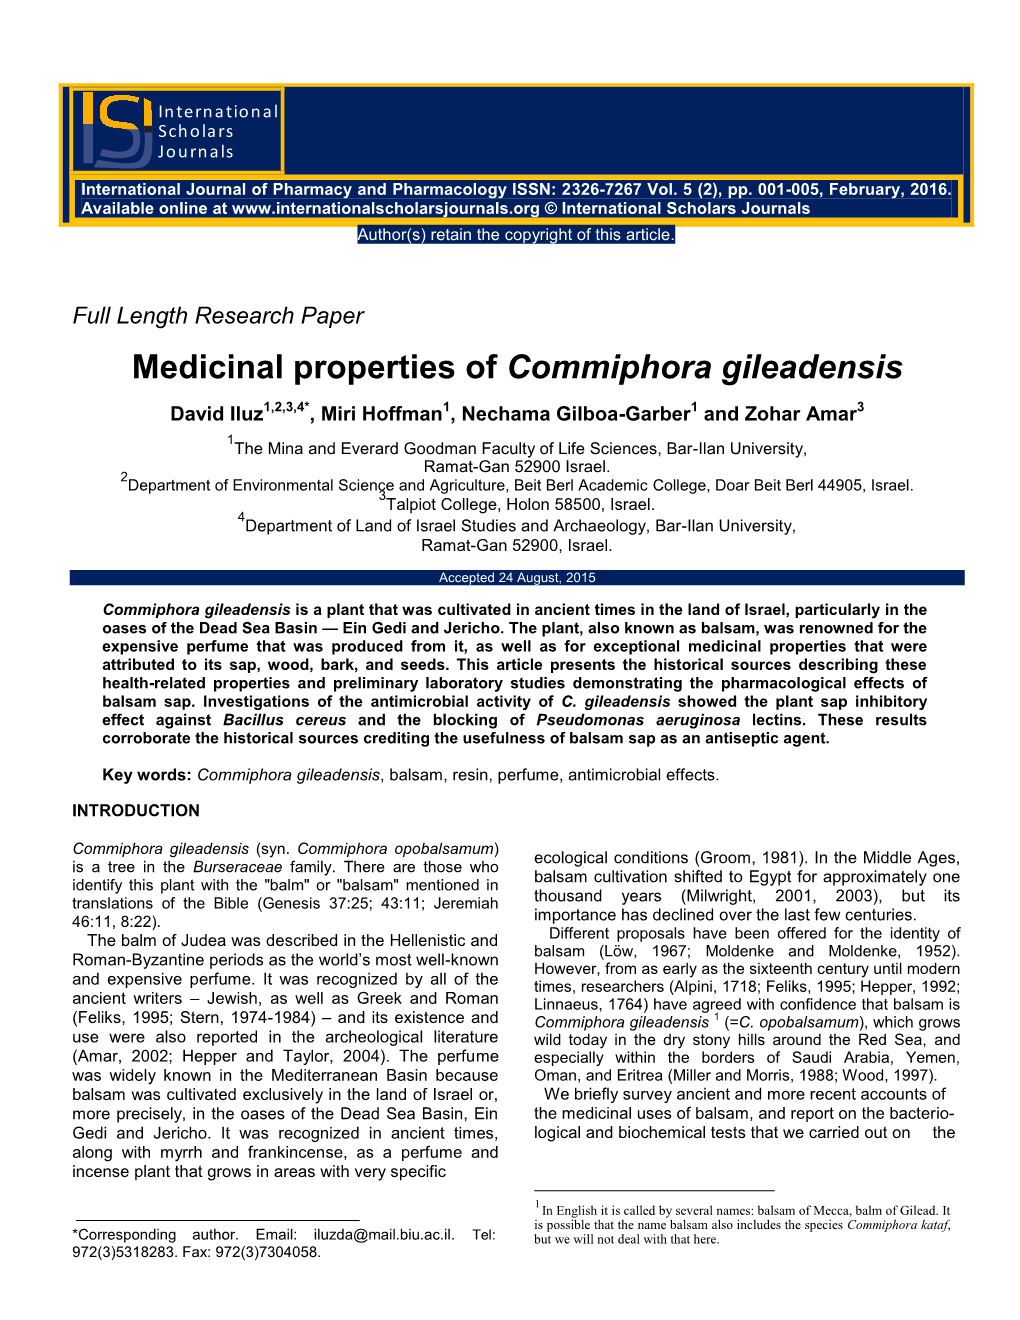 Medicinal Properties of Commiphora Gileadensis